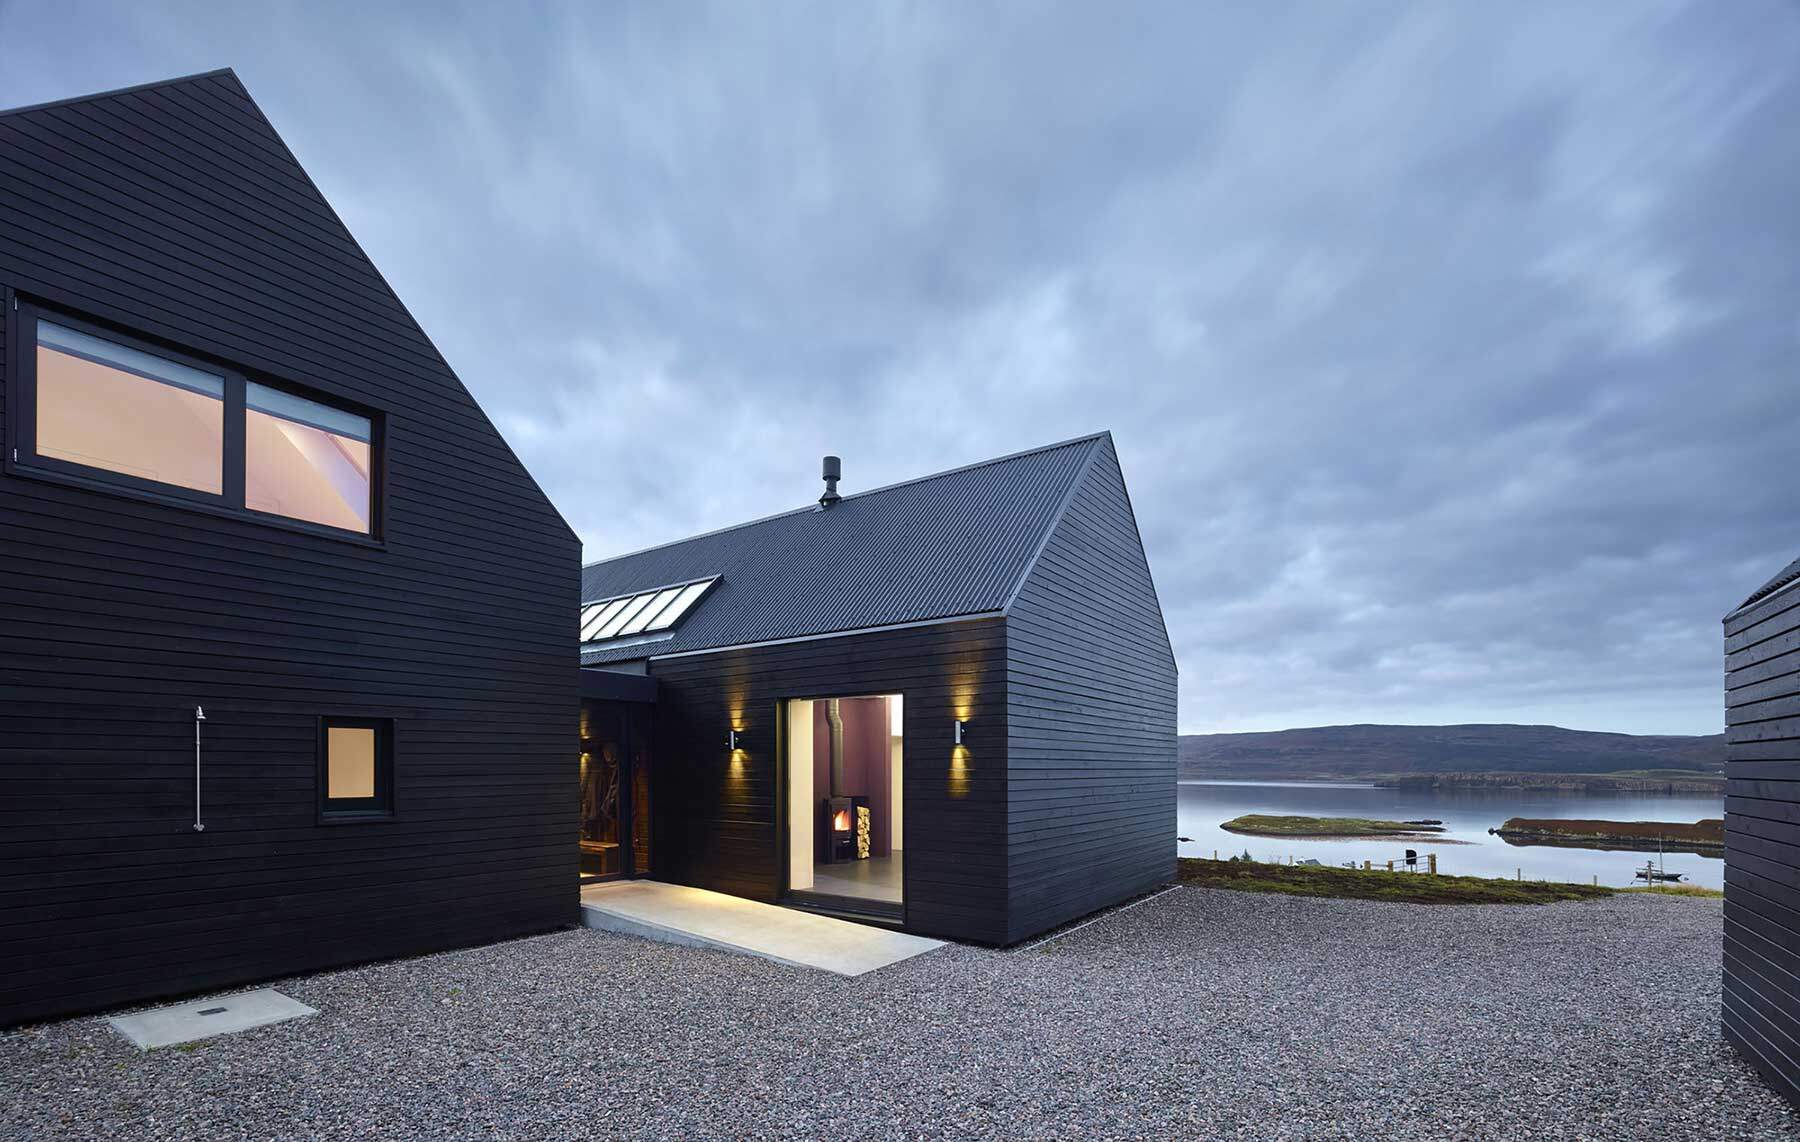 Skye Island house inspired by Scottish farm barns - HomeWorldDesign (9)